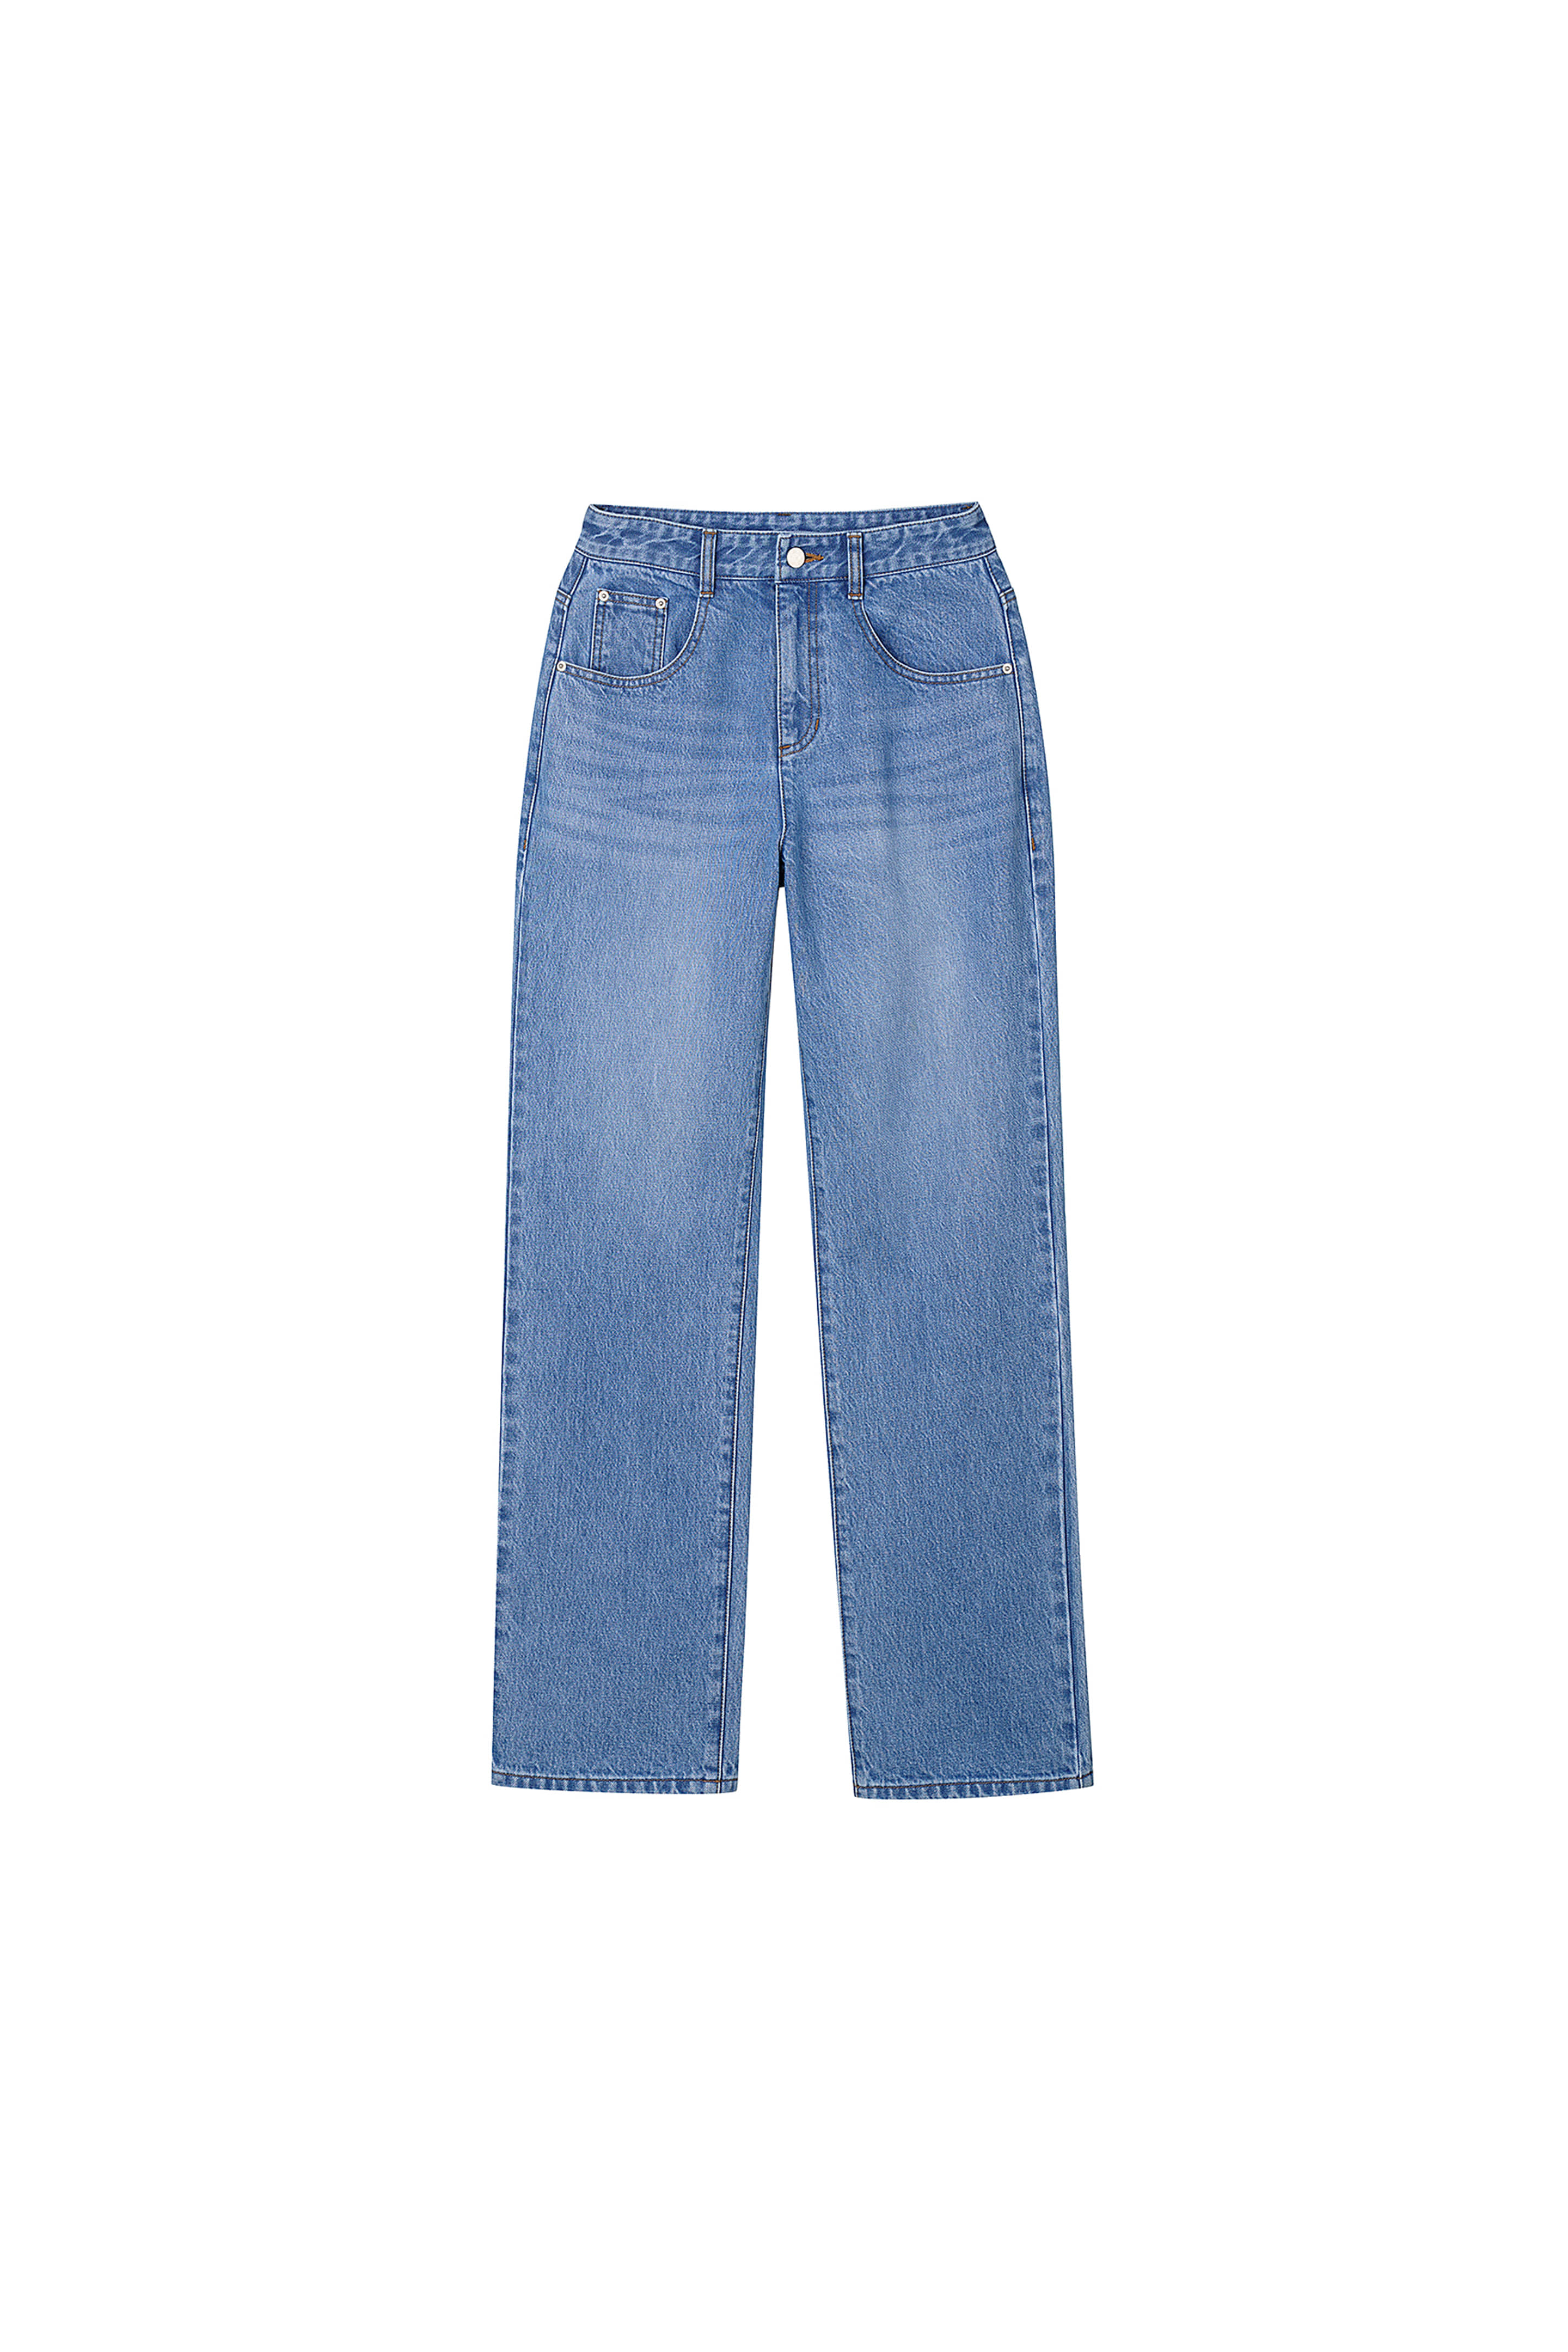 2nd) Jeans Wide Straight fit Blue (배우 경수진님 착용)